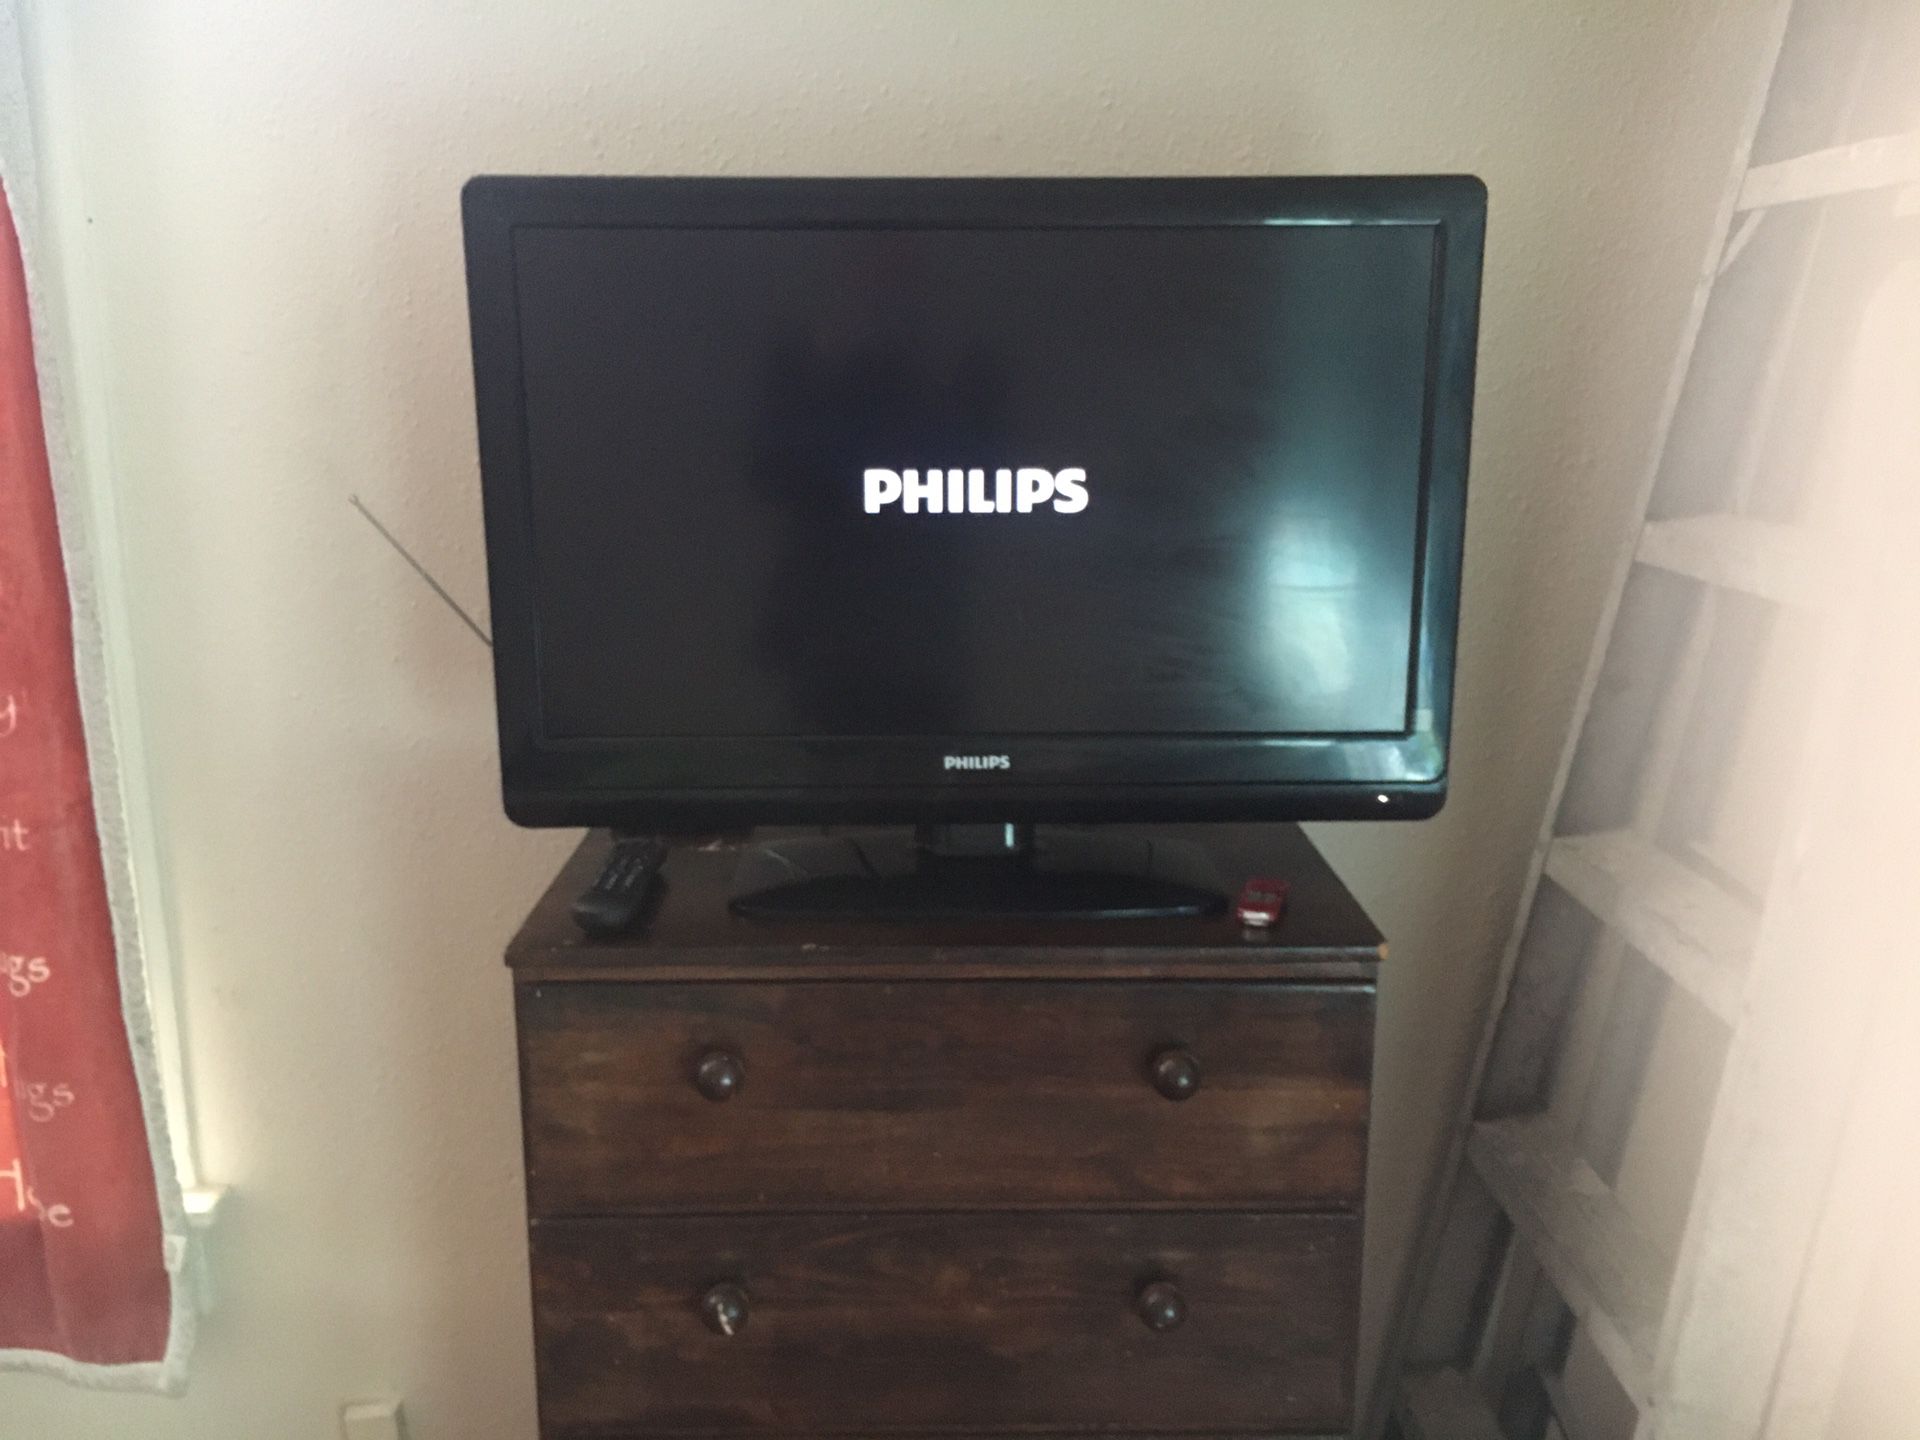 Phillips tv